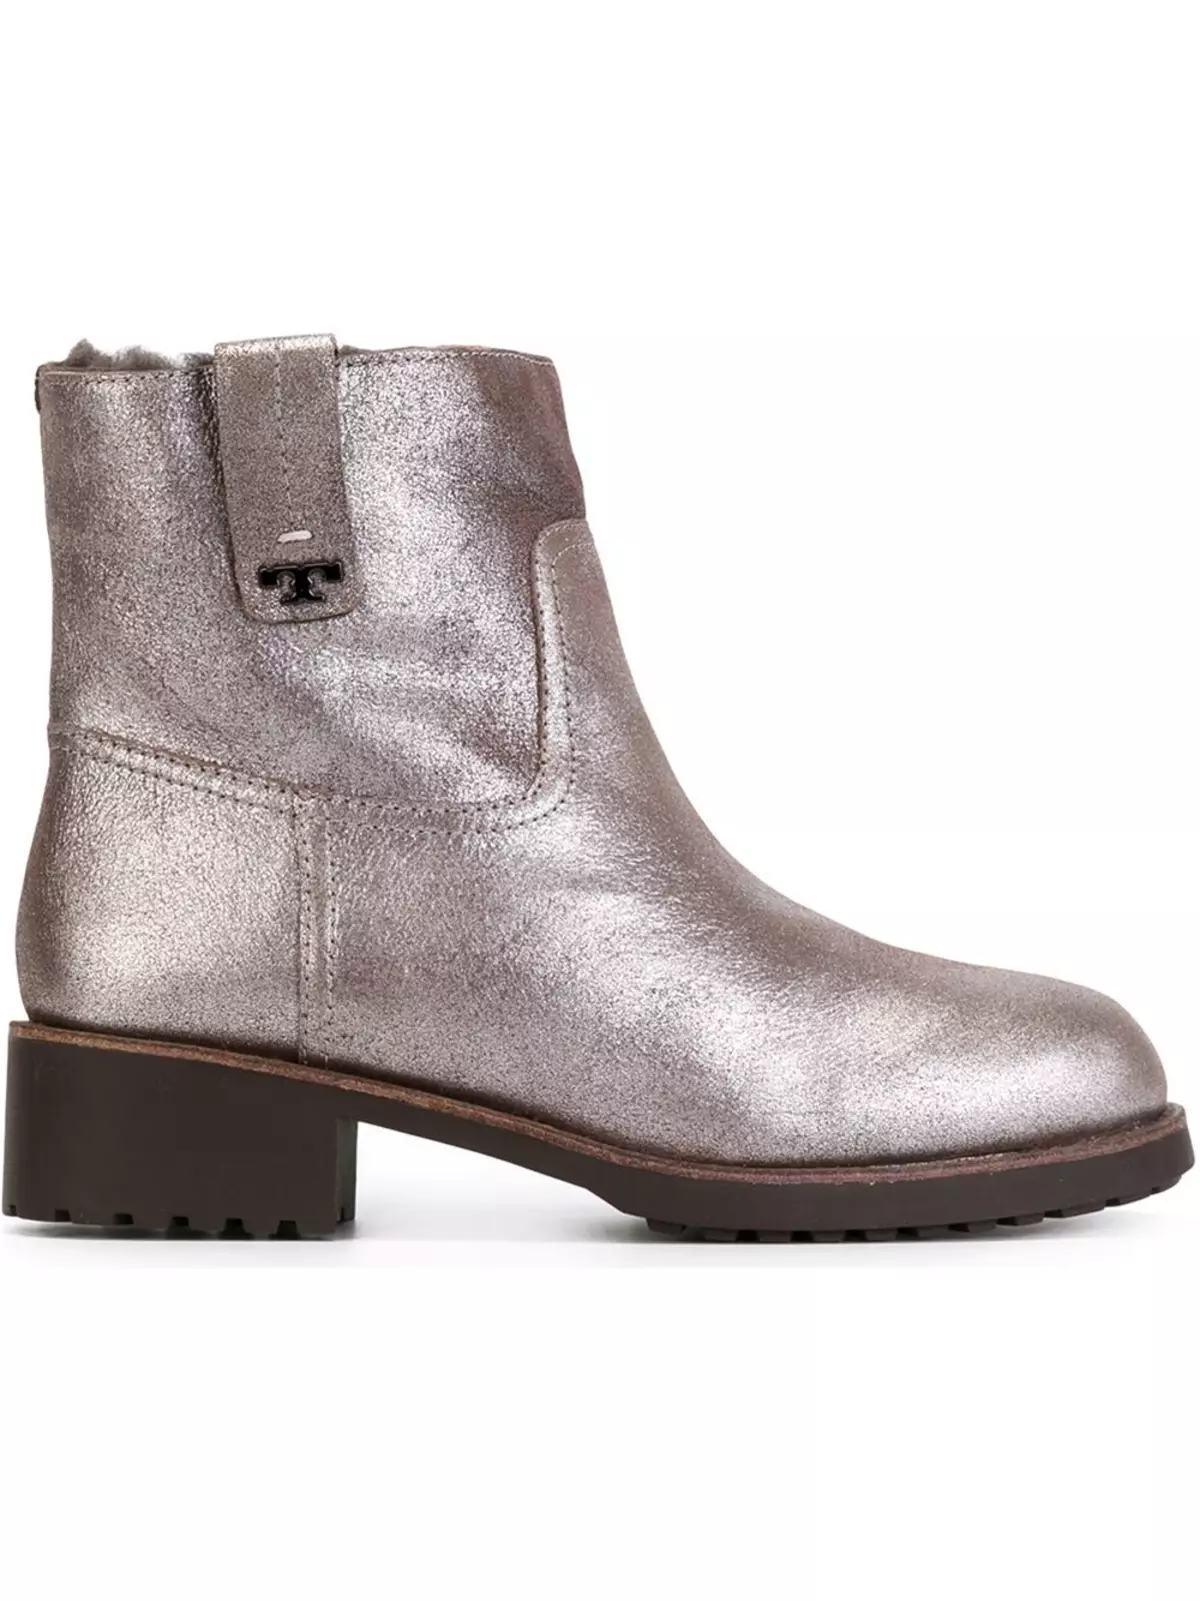 Boots (135 wêne): Trendên Fashion 2021, ji Rock Rock, Eva, Camel, Grinders, How to Wear Derby With Jeans, Mîlîtar & Burgundy Style 1842_52